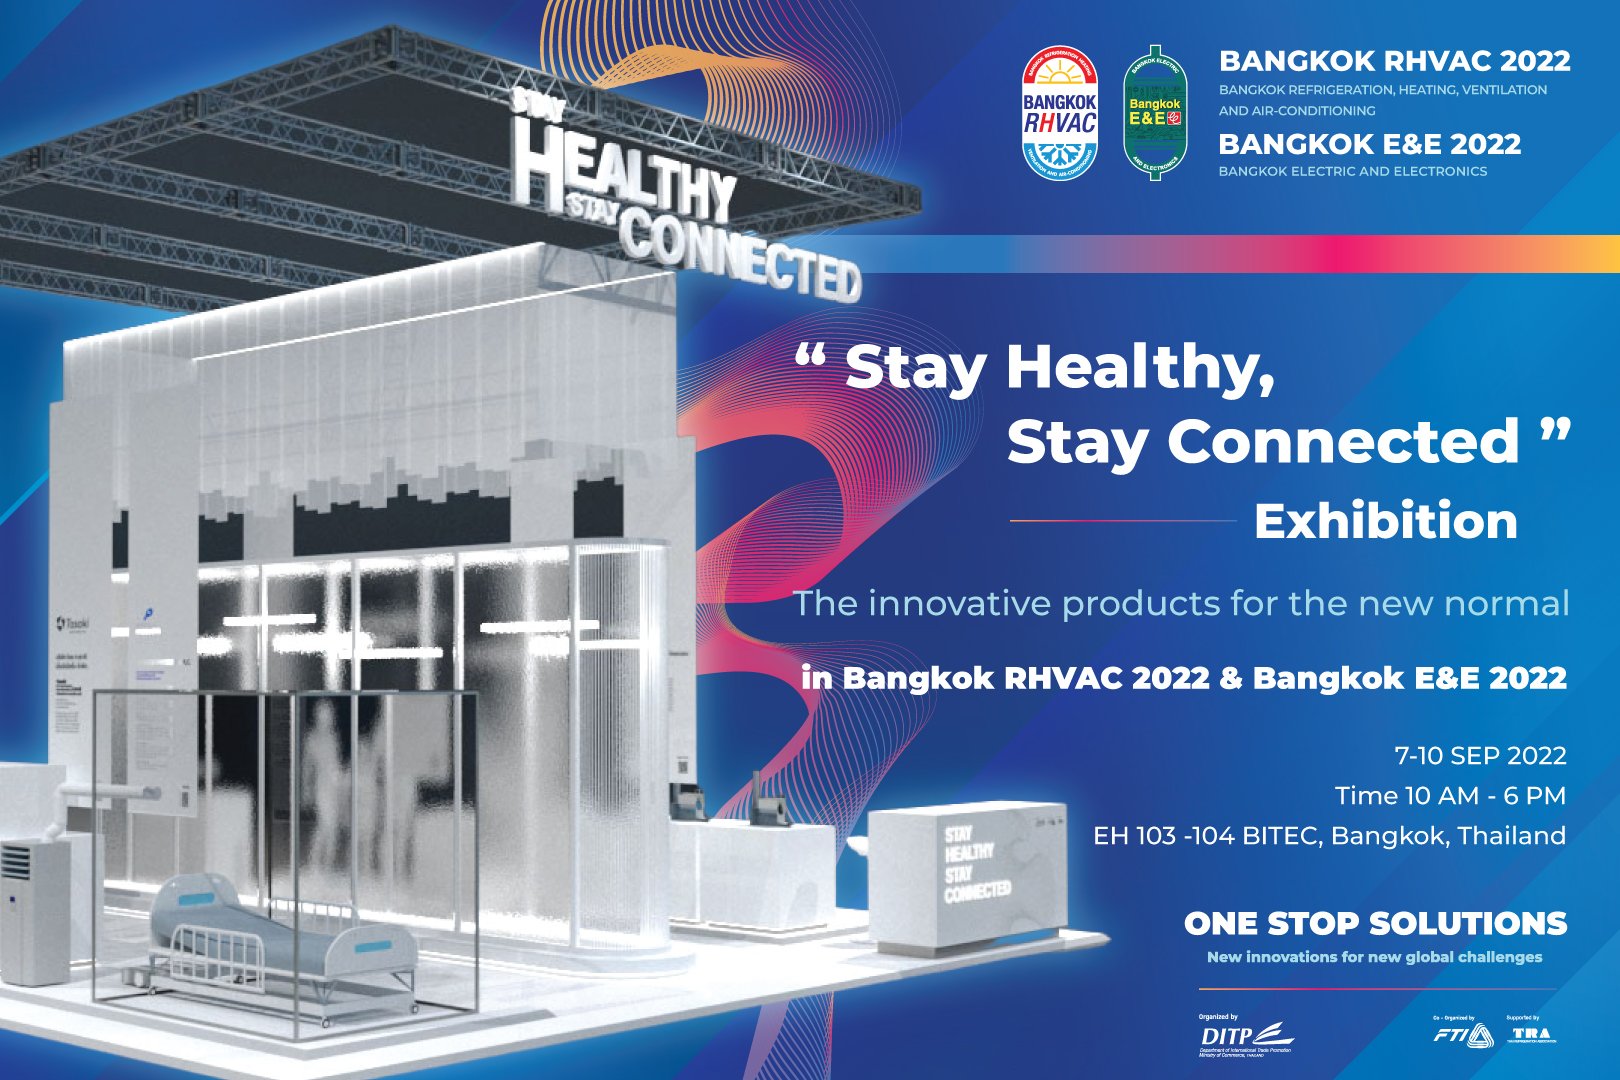 Bangkok RHVAC 2022 and Bangkok E&E 2022